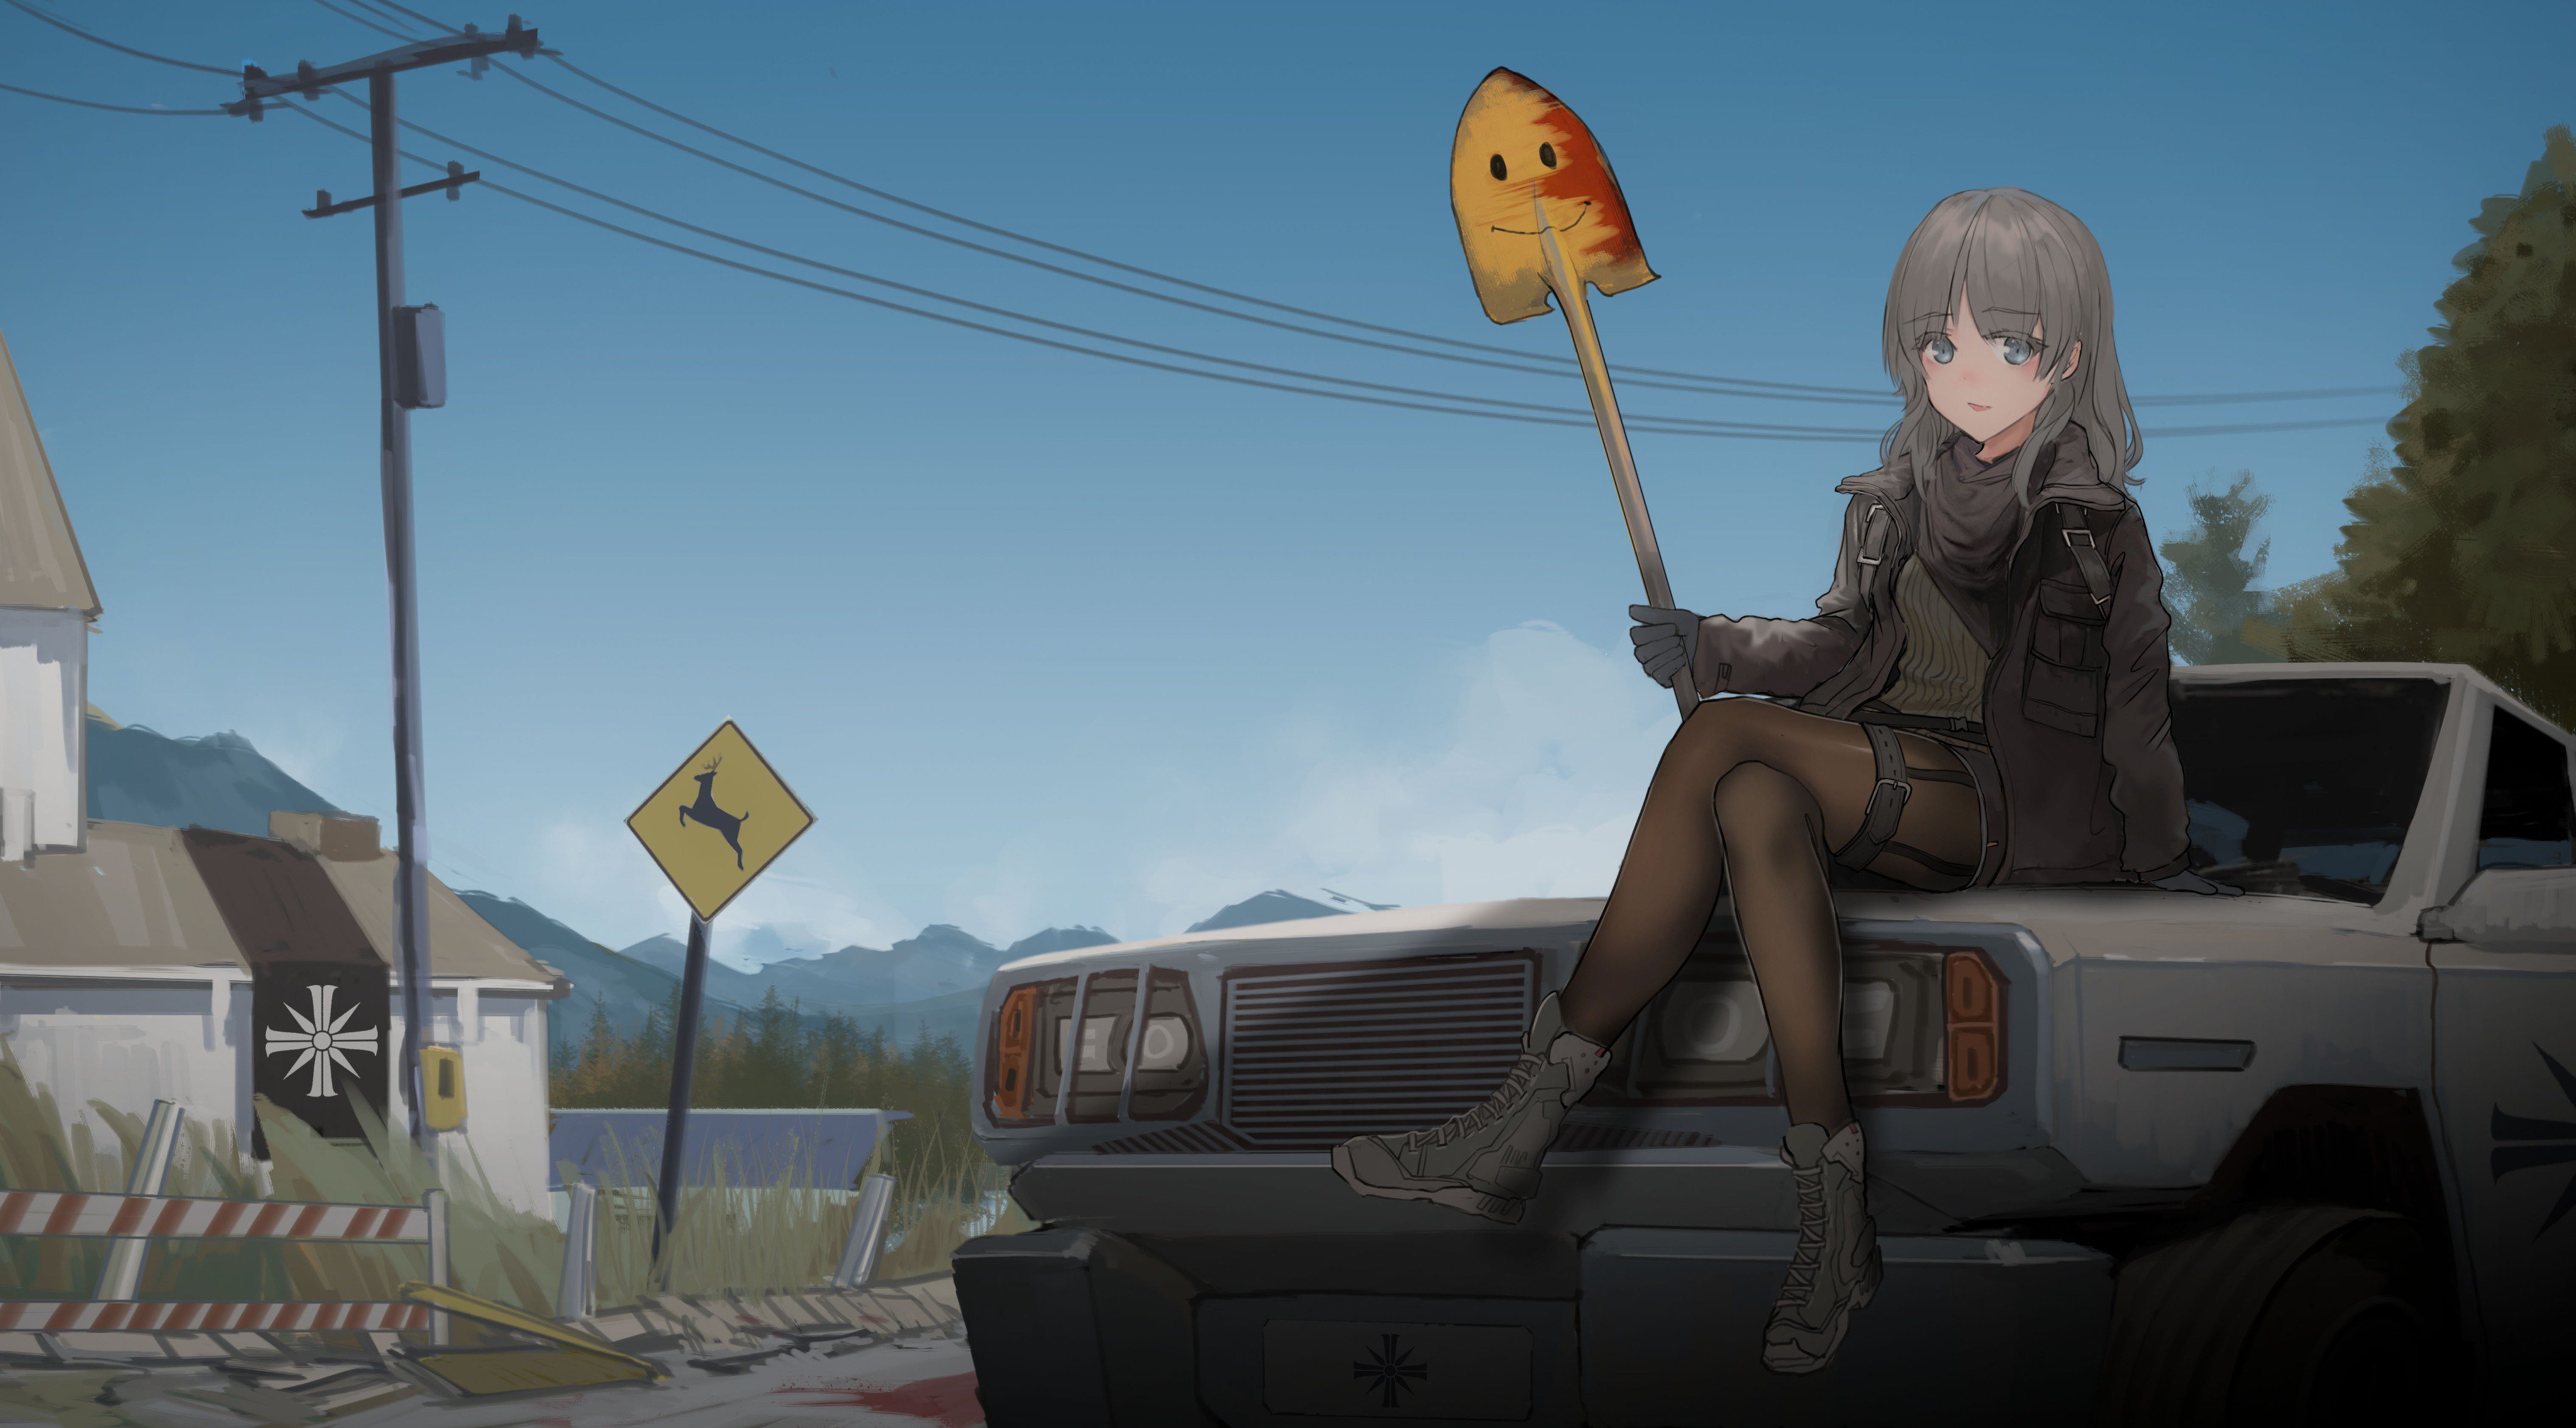 Anime 4096x2270 anime anime girls AegisFate Far Cry 5 shovels smiling car vehicle sign legs crossed